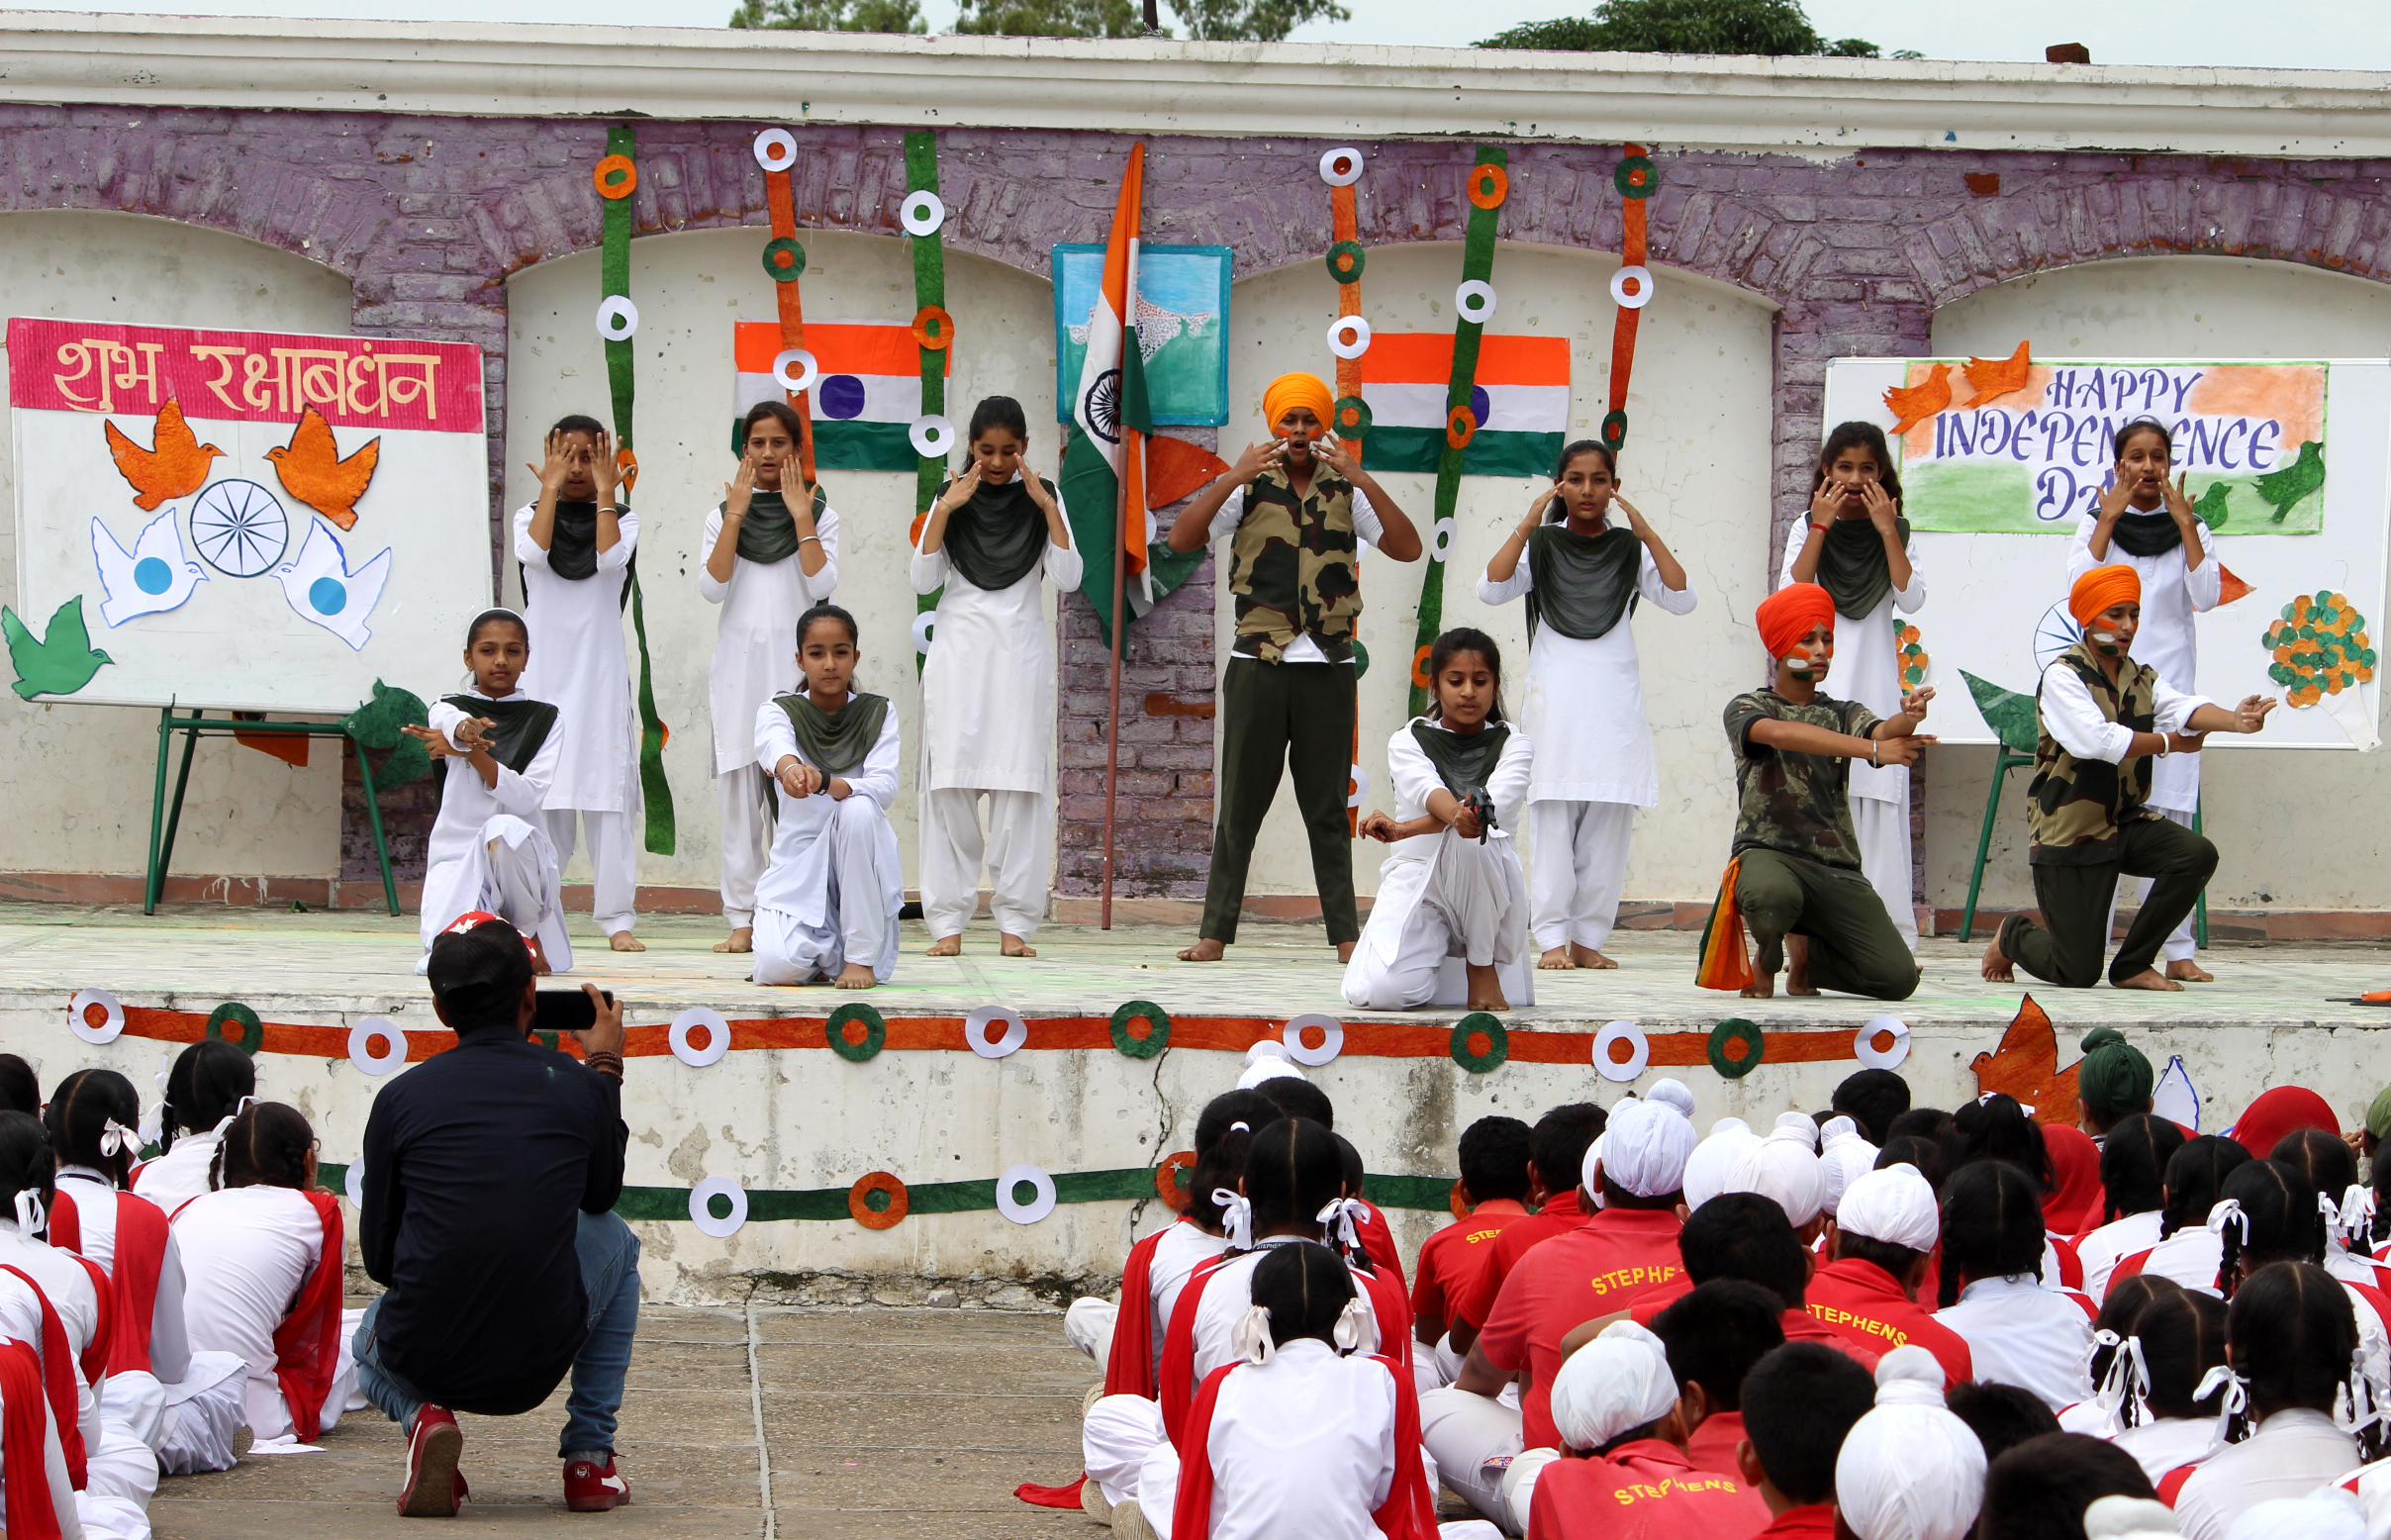 Stephens International Public School Celebrates Independence Day and Raksha Bandhan